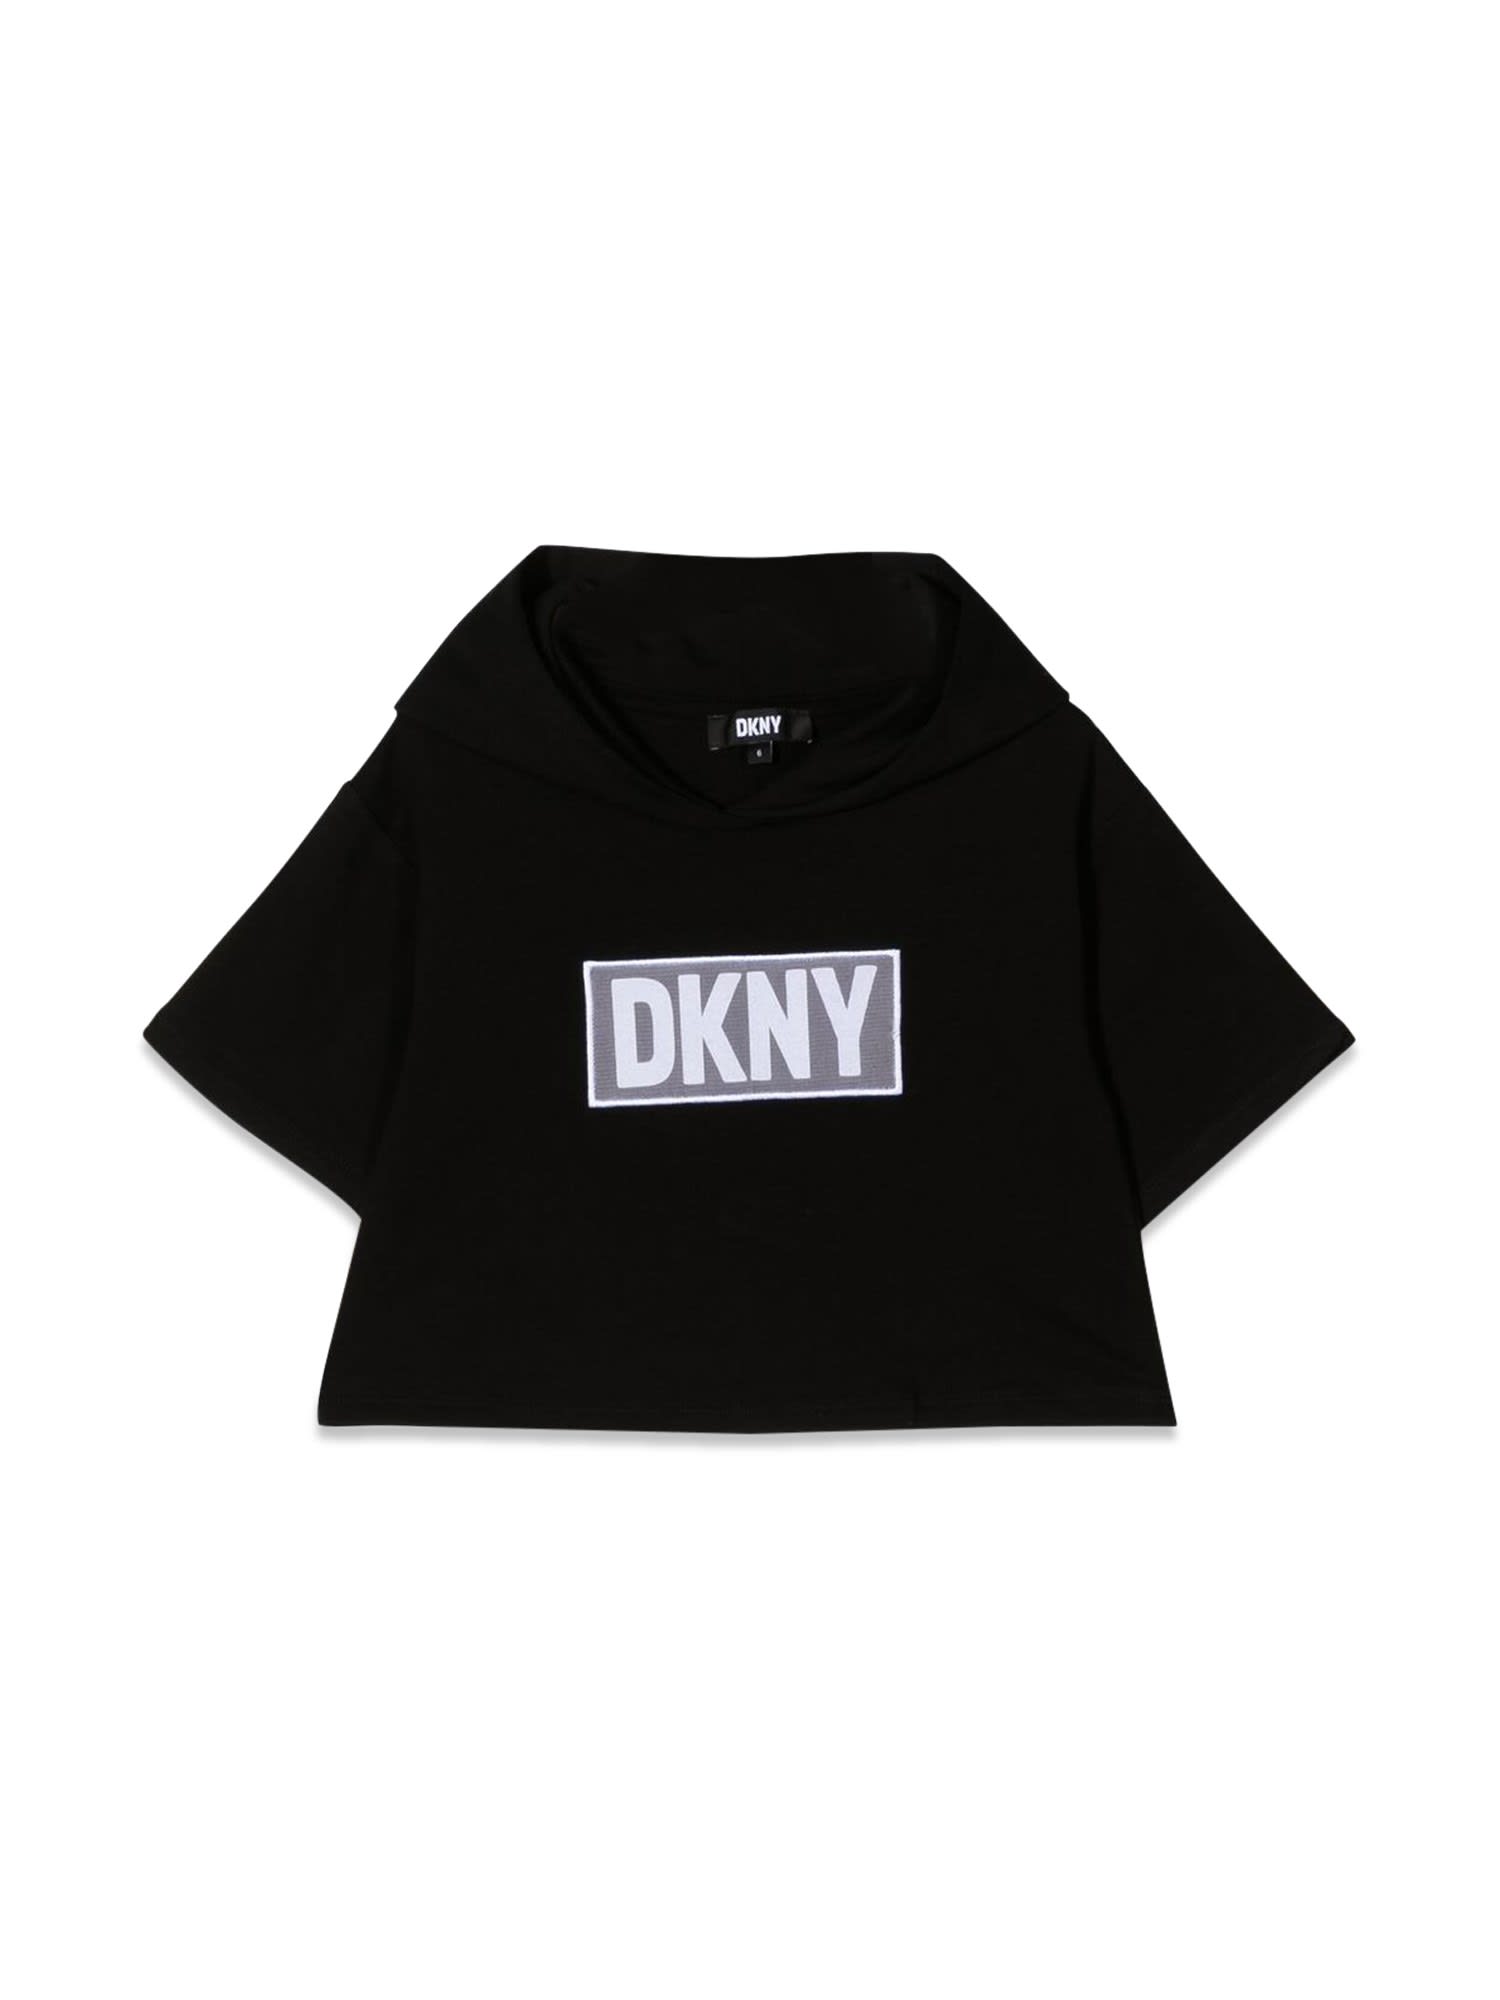 DKNY M/c Neck T-shirt